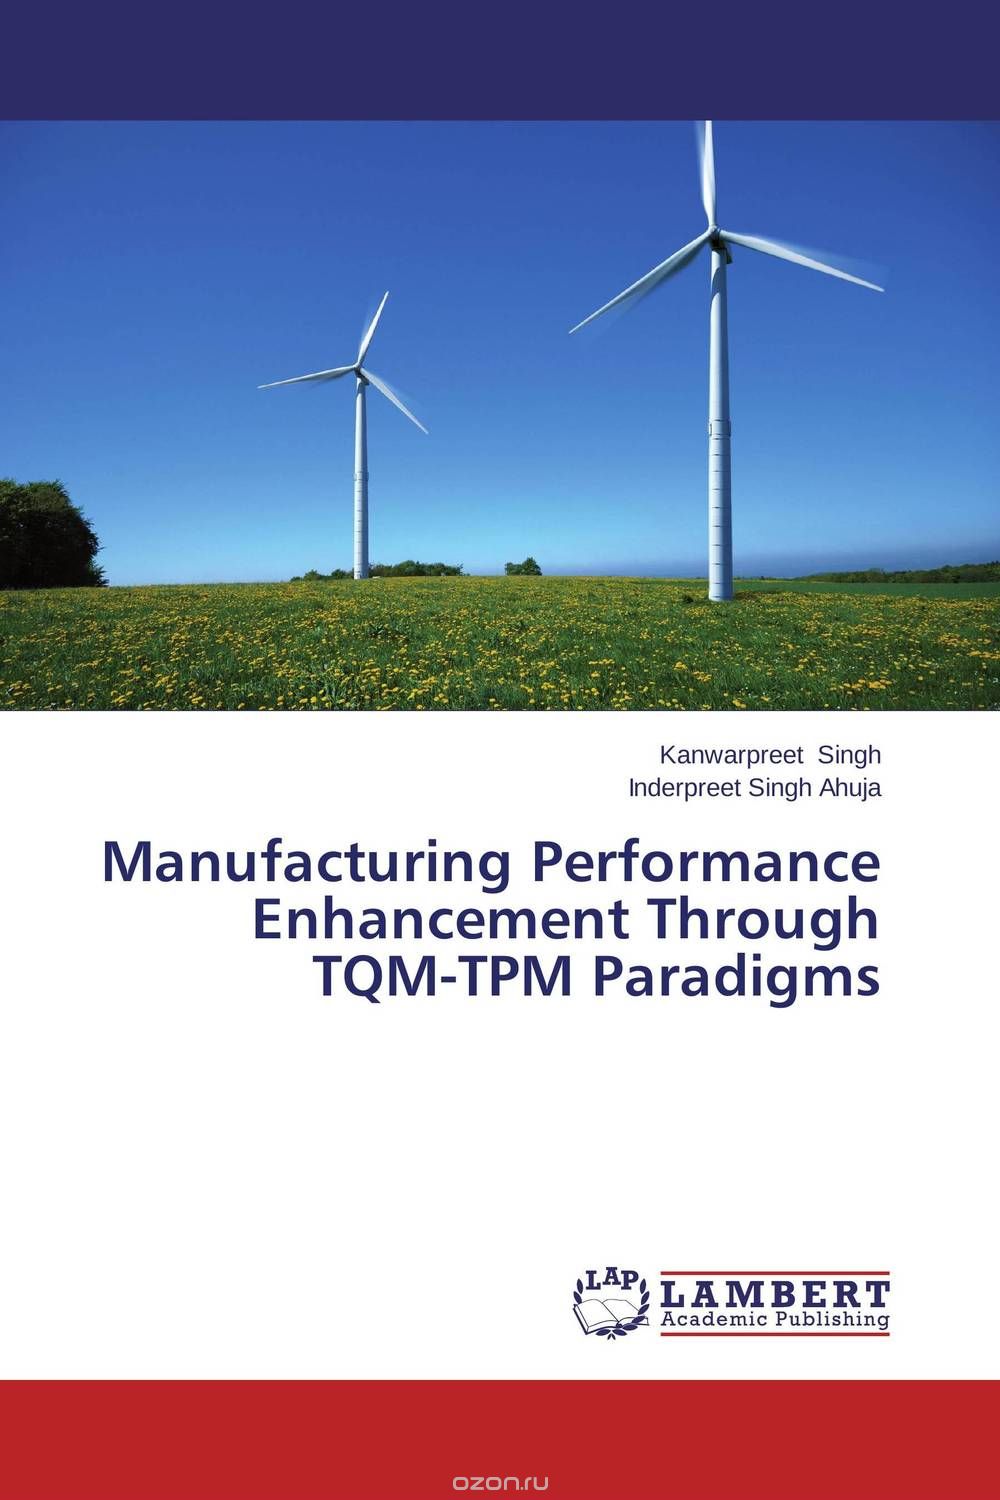 Скачать книгу "Manufacturing Performance Enhancement Through TQM-TPM Paradigms"